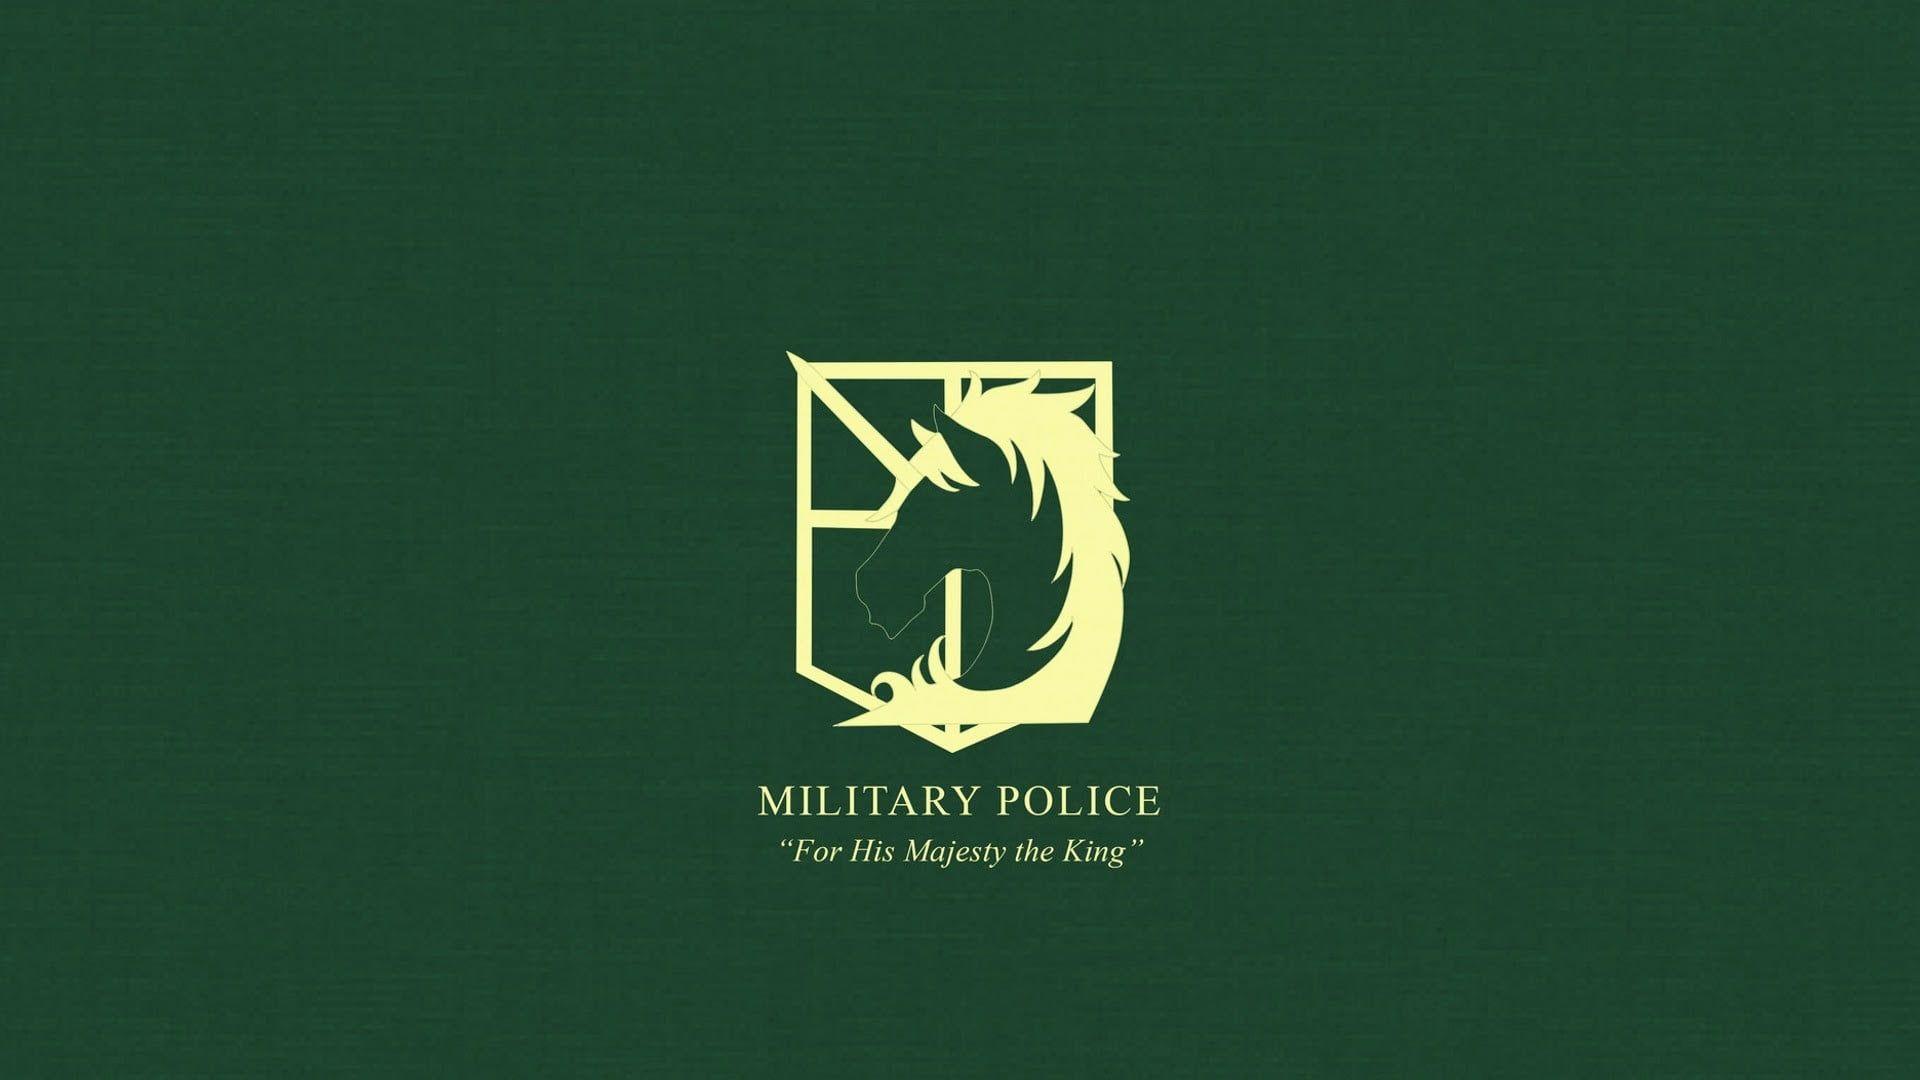 Military Police logo HD wallpaper